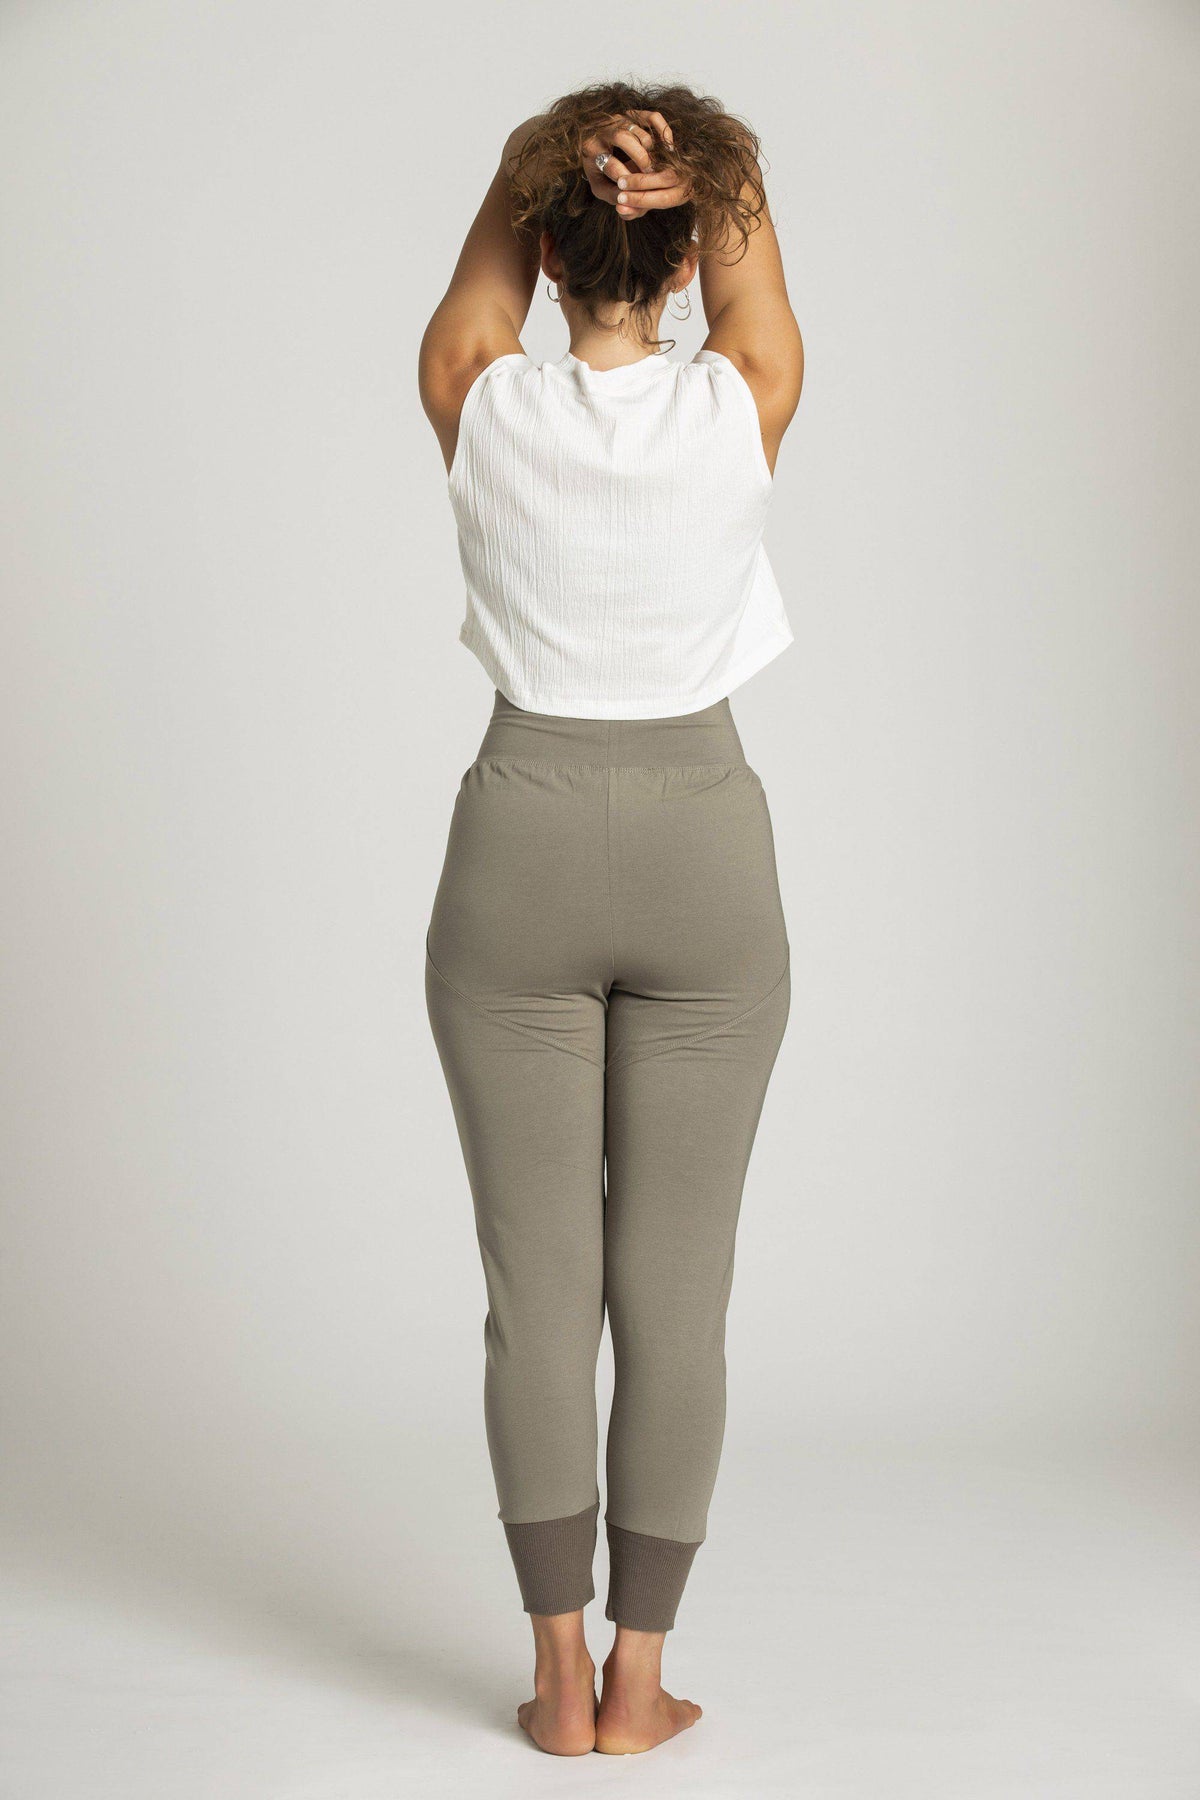 Soft Yoga Joggers - womens clothing - Ripple Yoga Wear